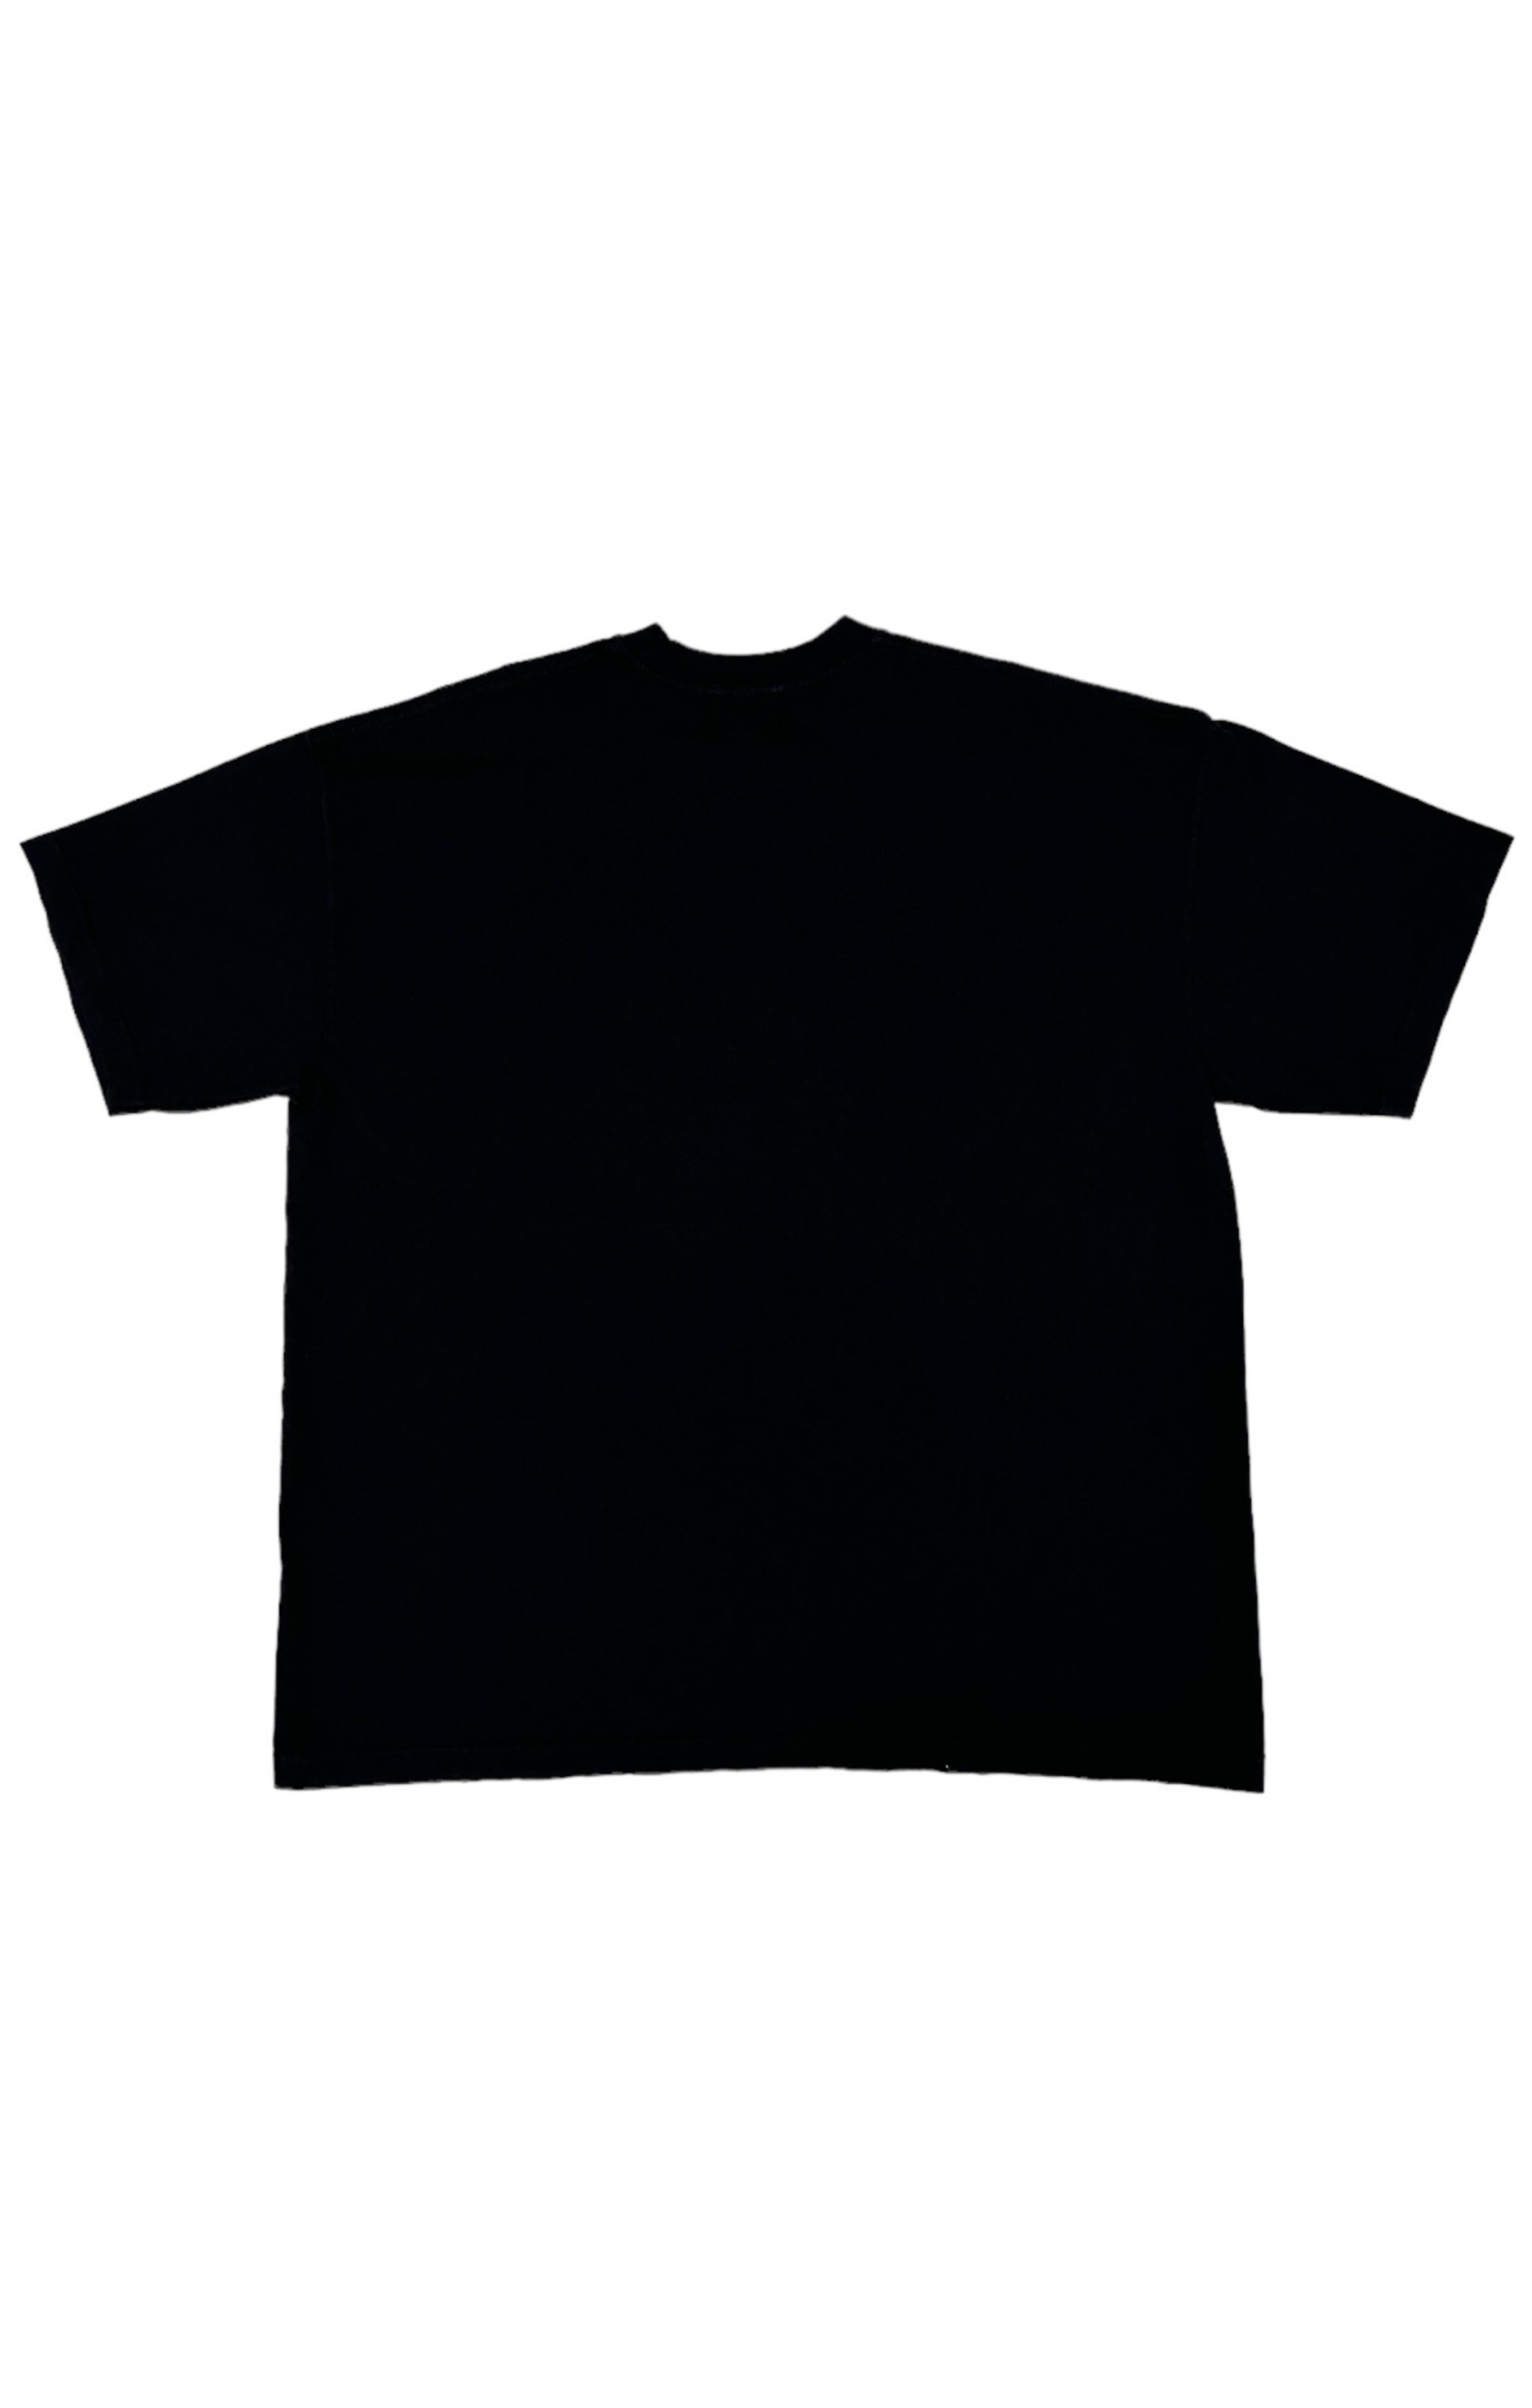 PSYCHWORLD T-shirt Size: 2XL